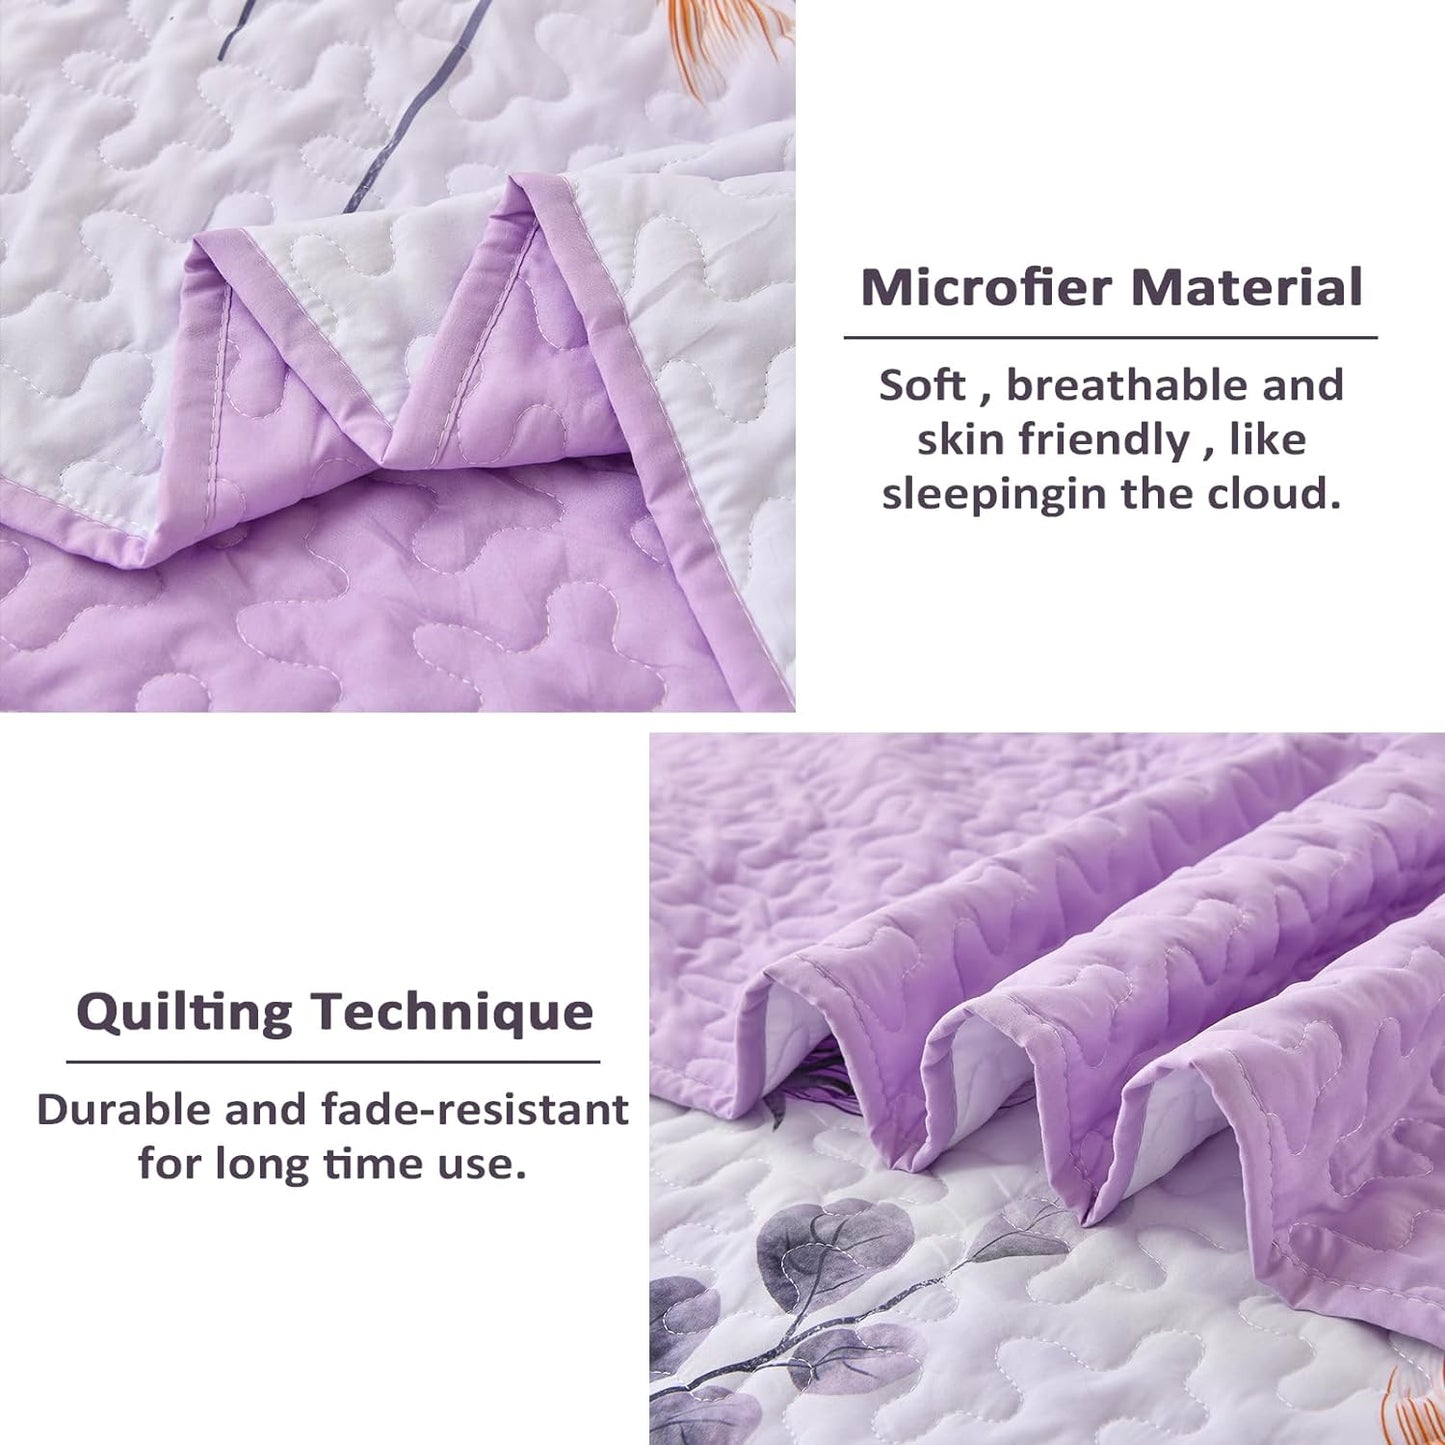 Purple & Yellow Floral 3 Piece Bedding Quilt Set